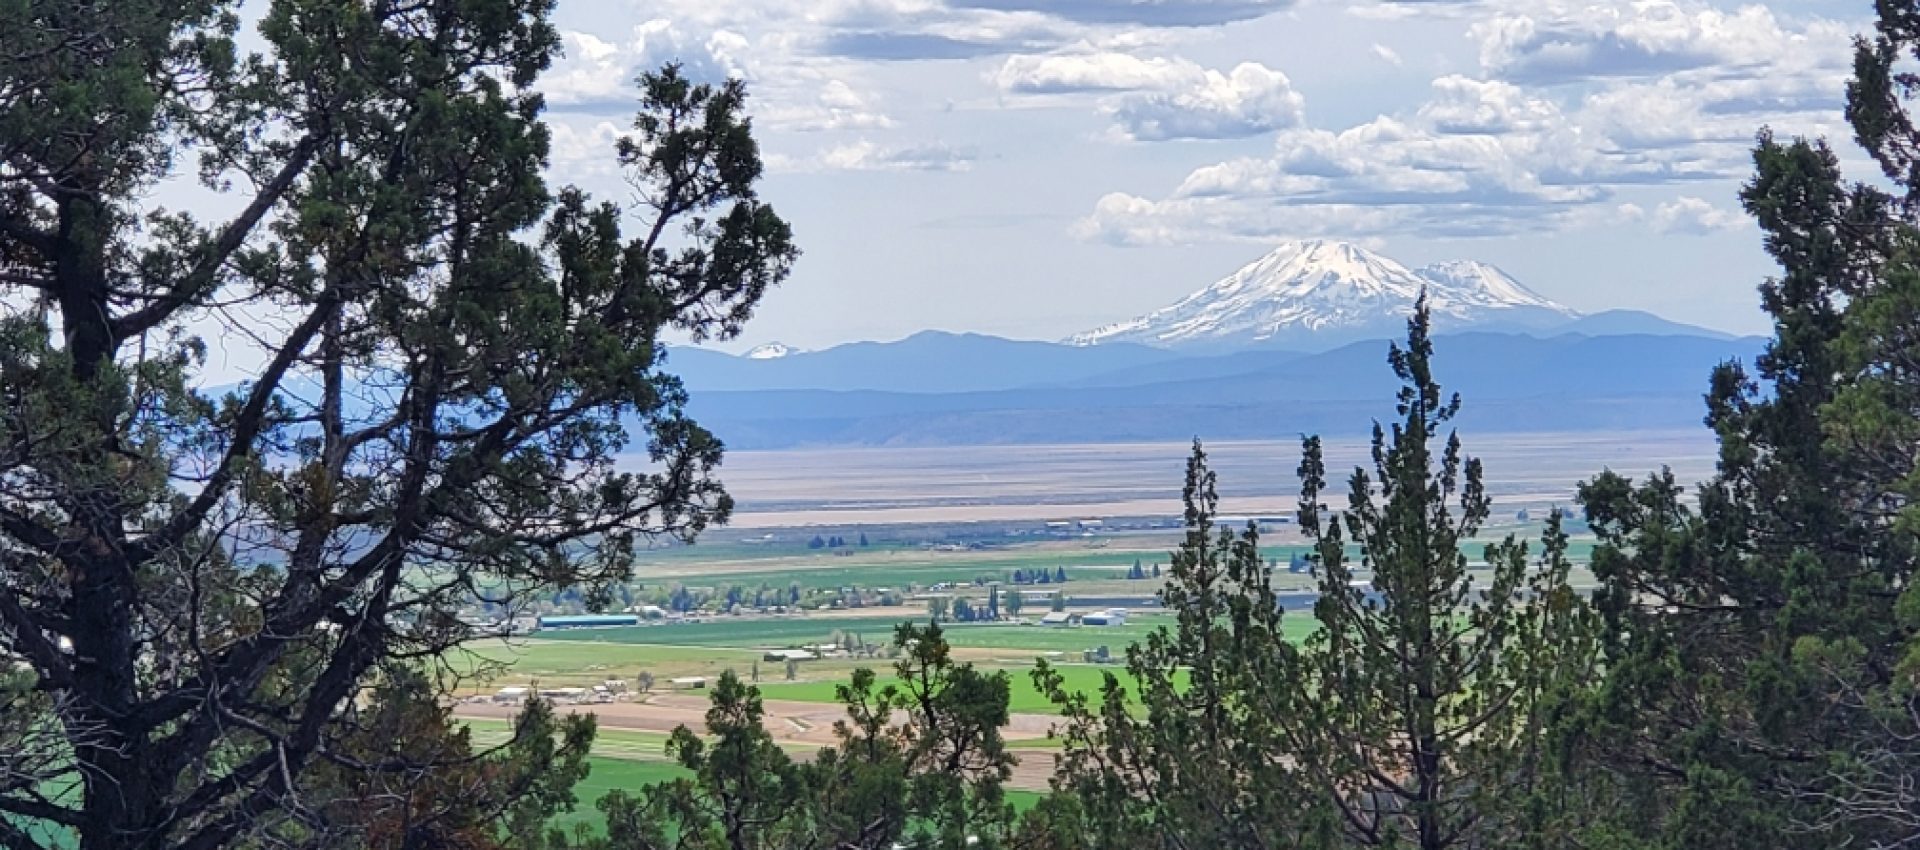 Cal-Ranch_Klamath-County-Oregon-1